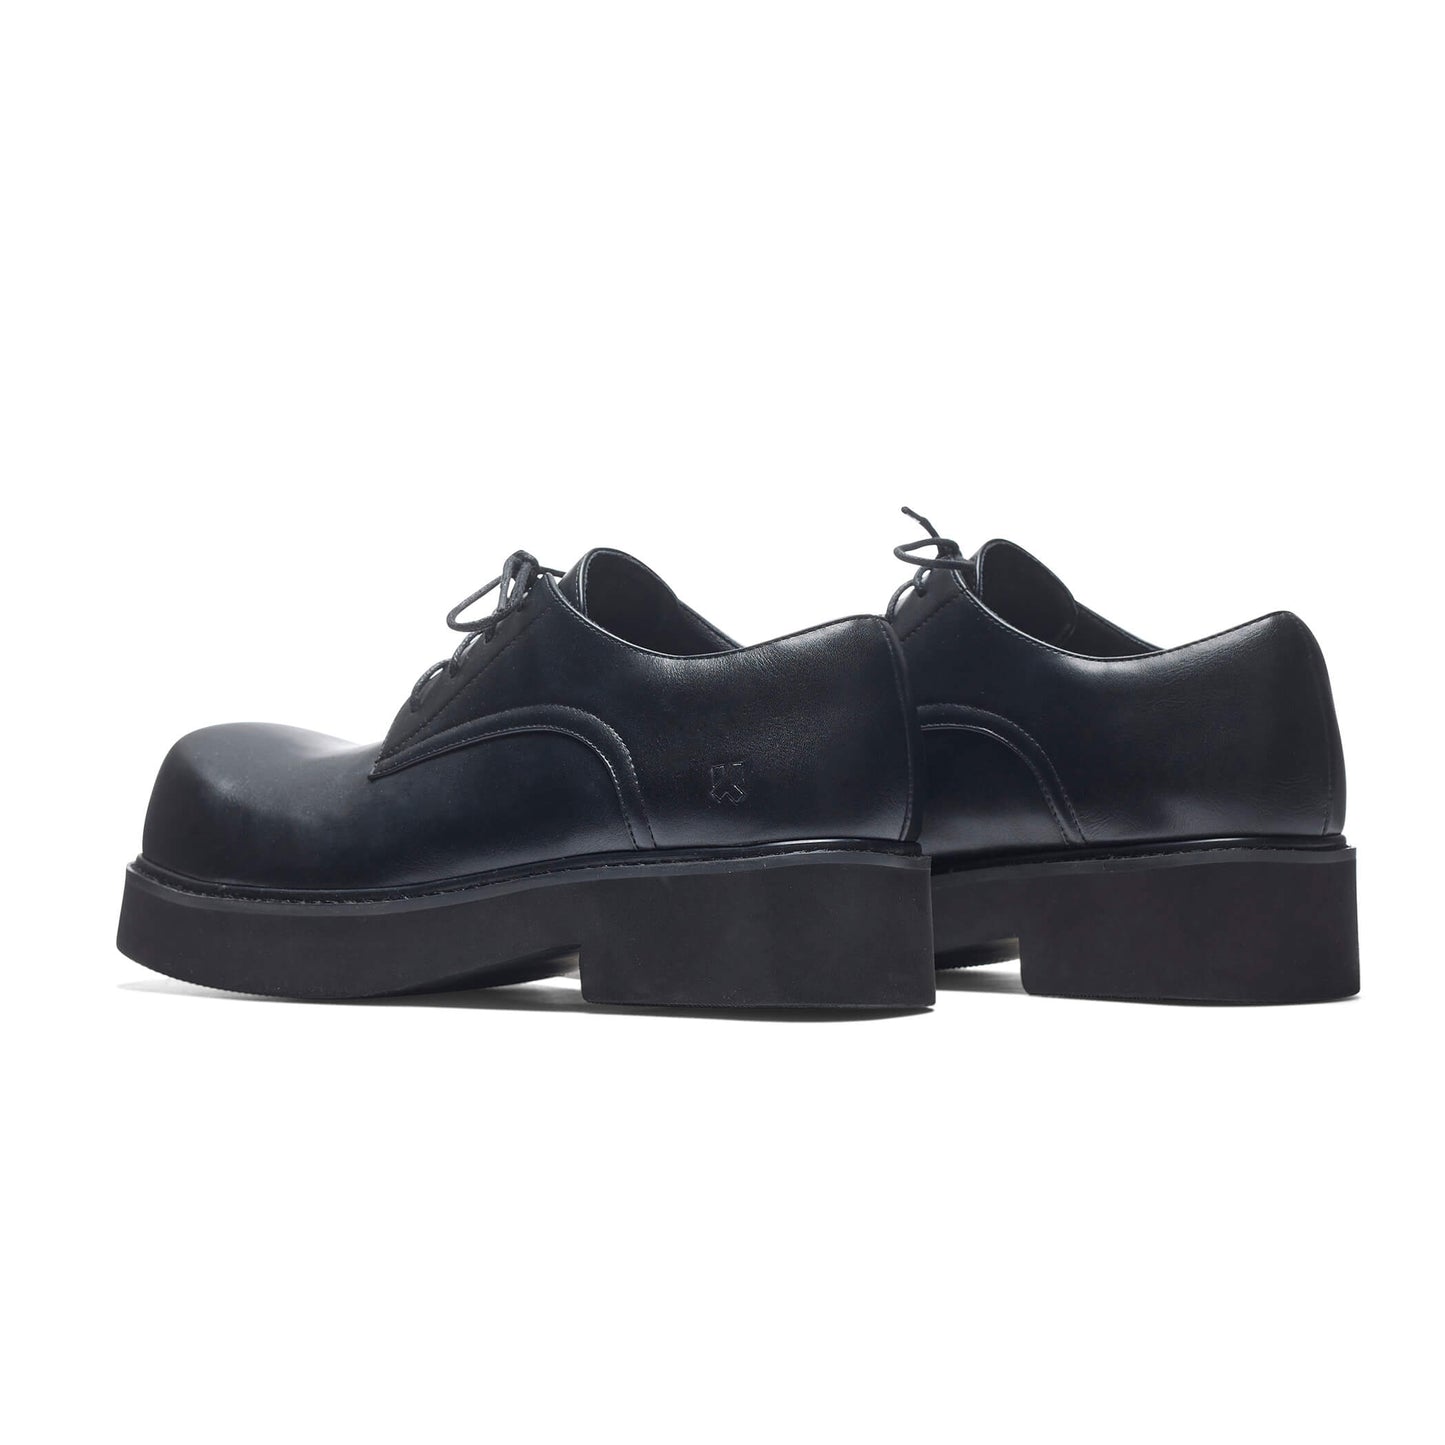 400% Oversized Derby Shoes - Black - Koi Footwear - Black View